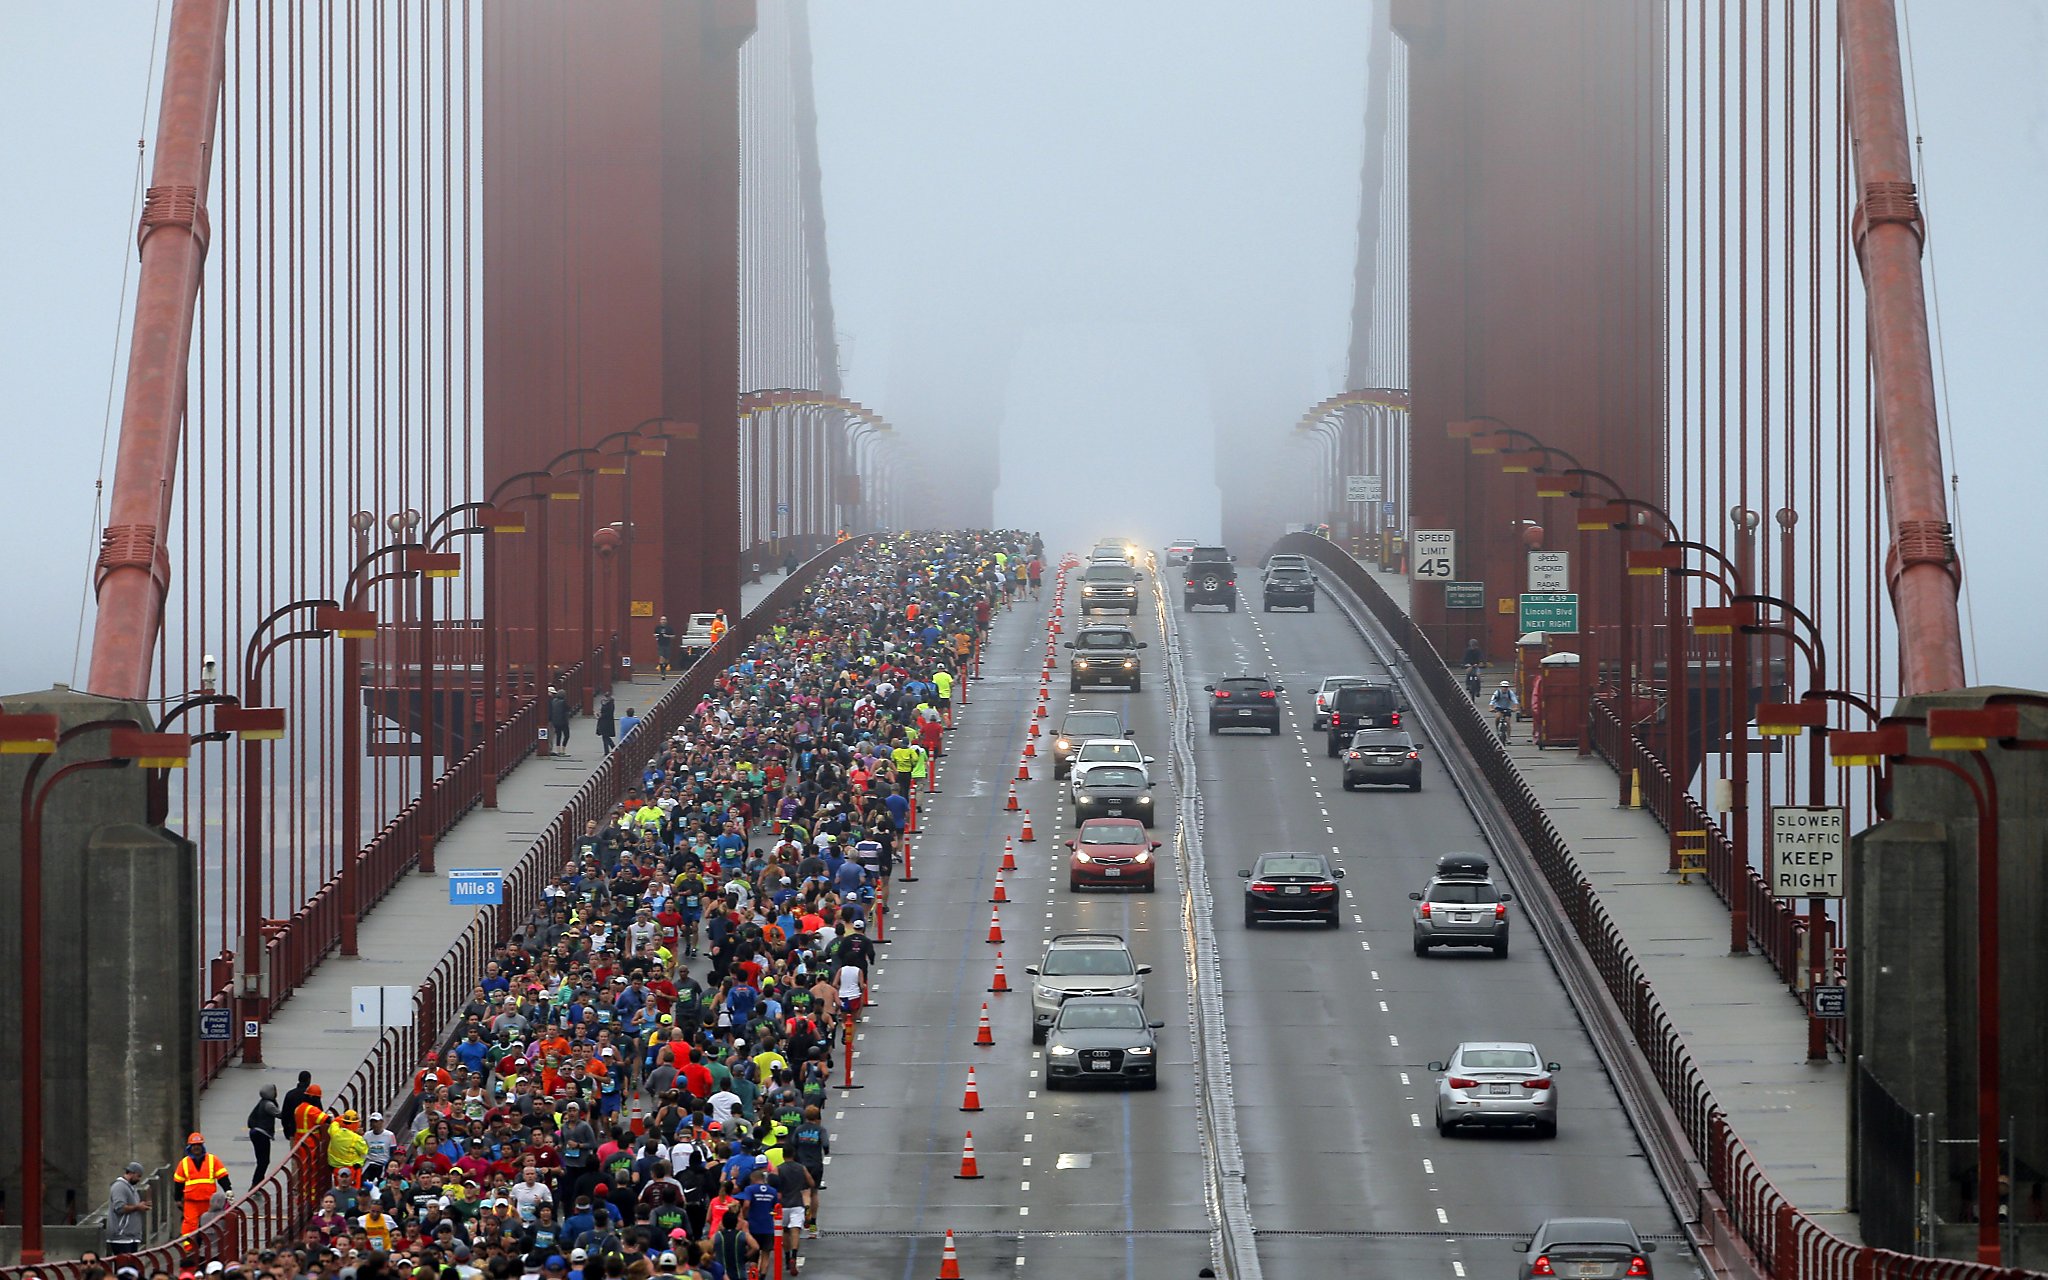 Golden Gate Bridge terror fears put SF Marathon on shaky footing - San Francisco Chronicle2048 x 1280